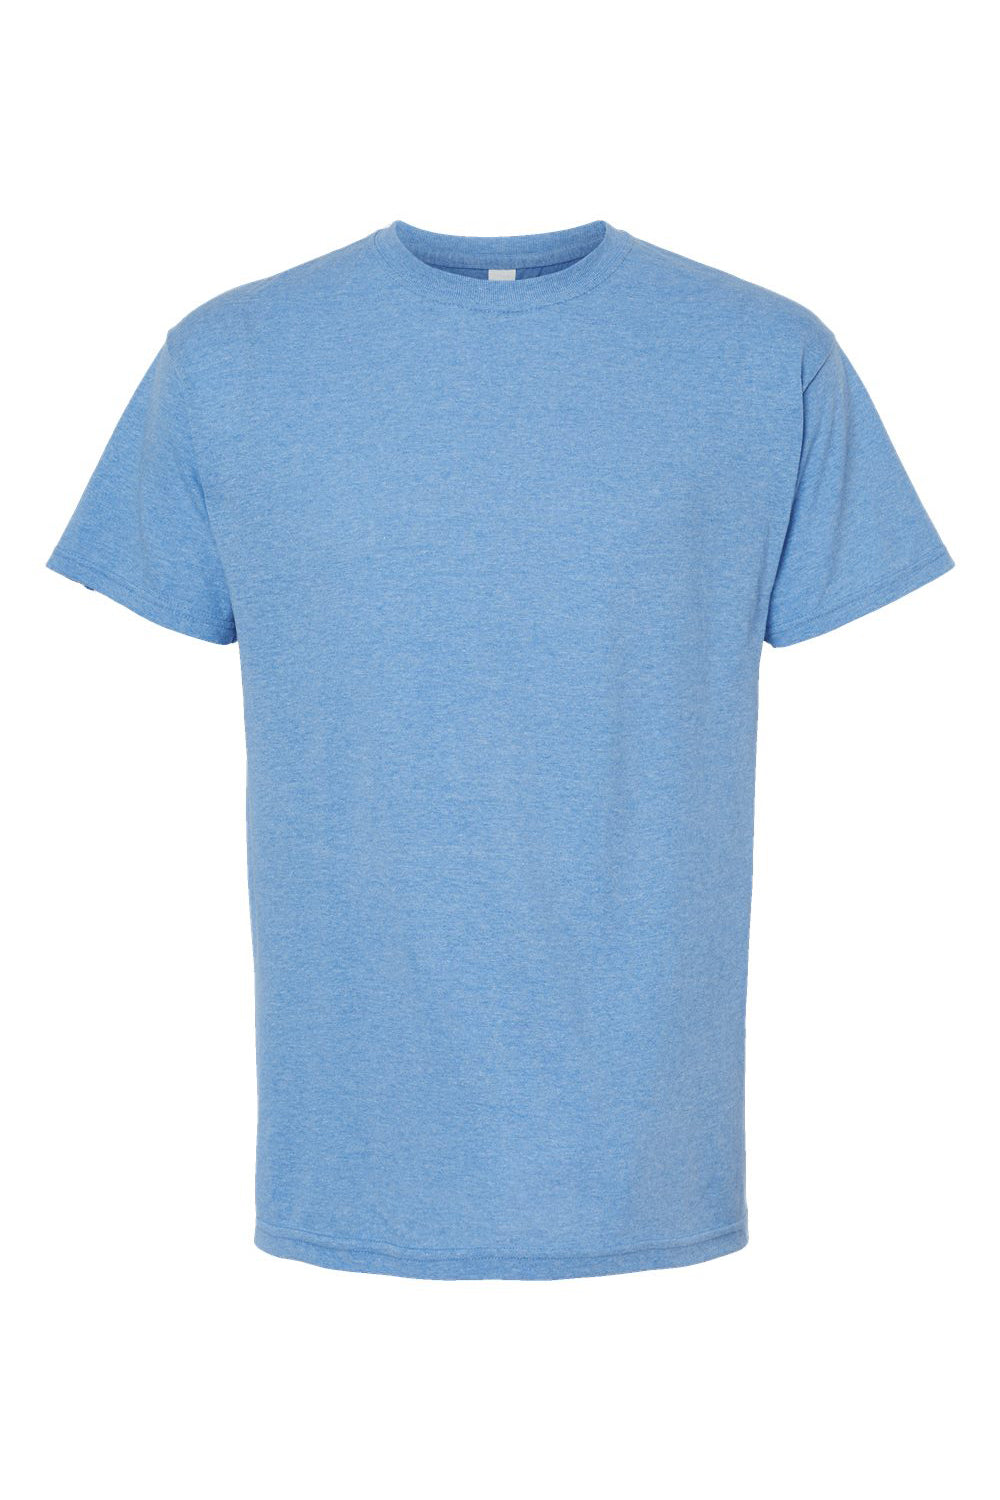 M&O 4800 Mens Gold Soft Touch Short Sleeve Crewneck T-Shirt Heather Light Blue Flat Front